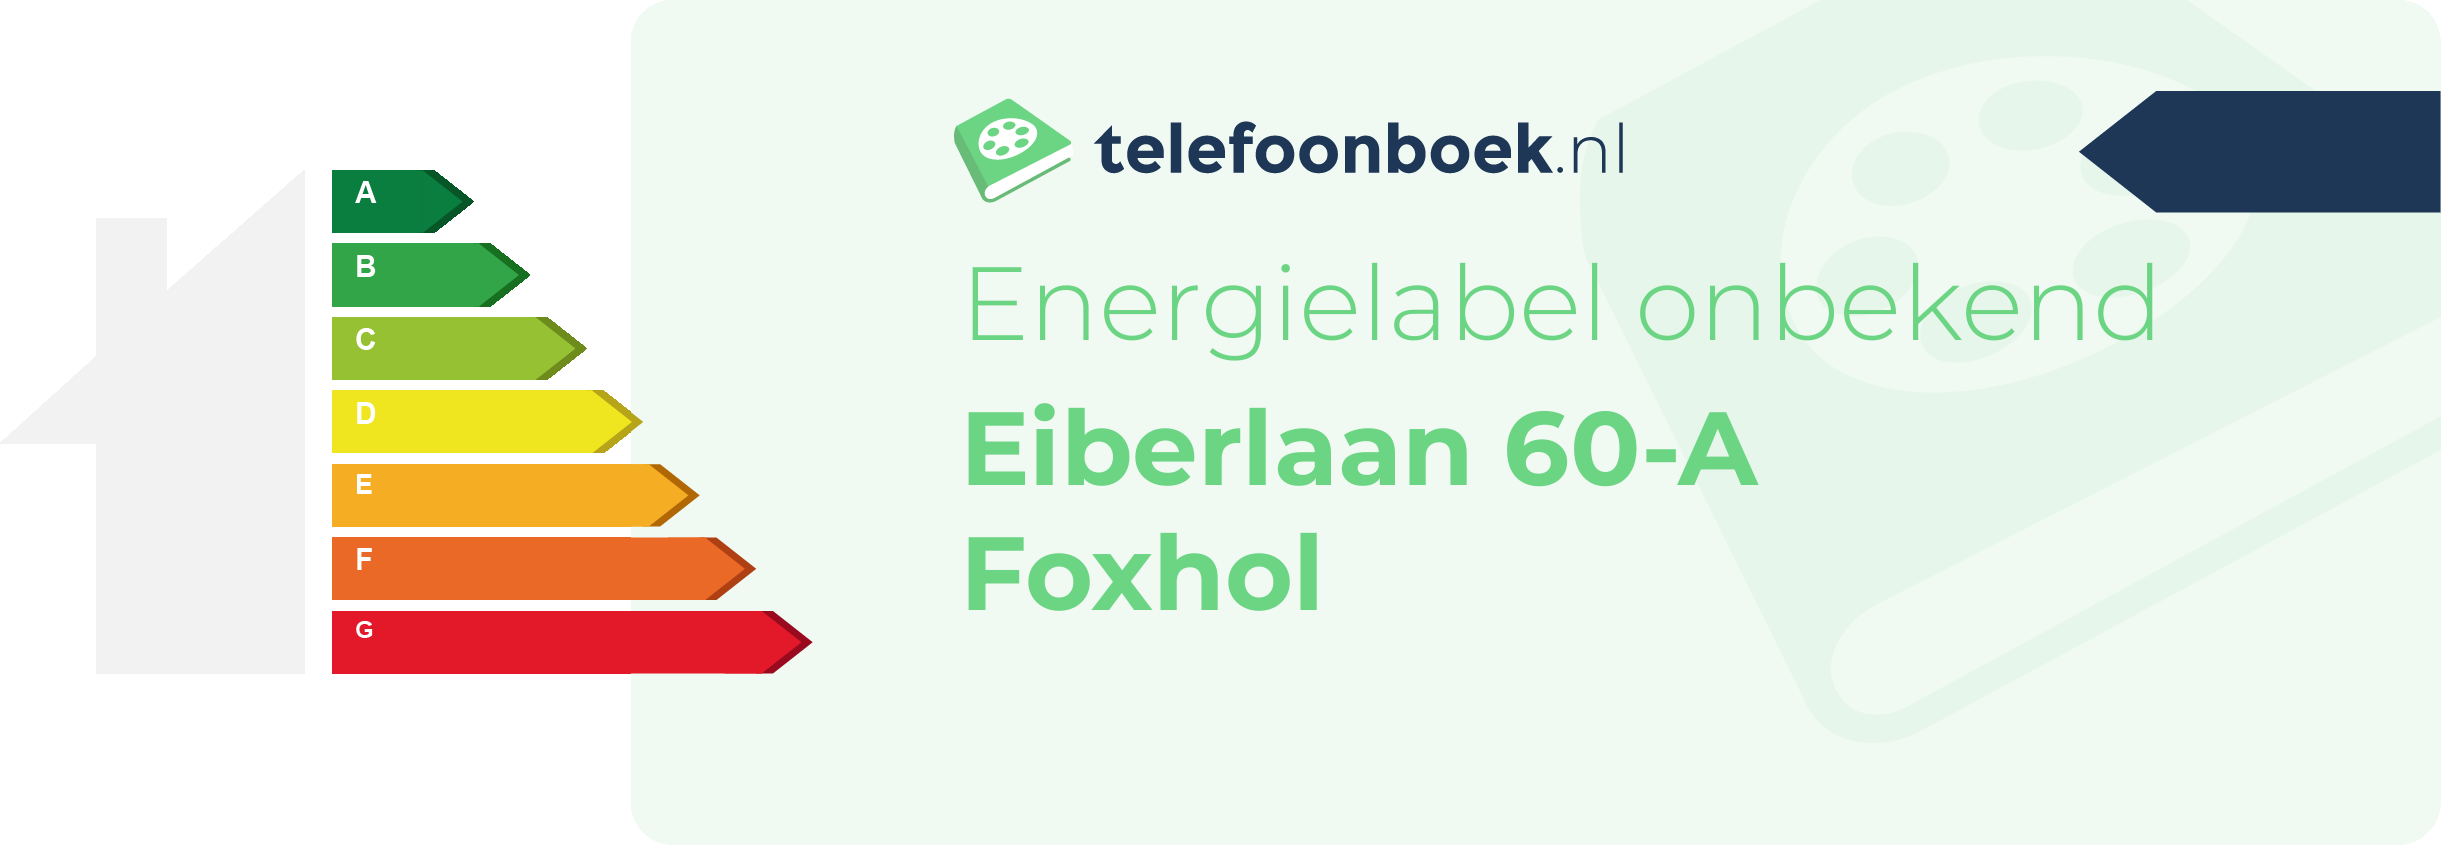 Energielabel Eiberlaan 60-A Foxhol